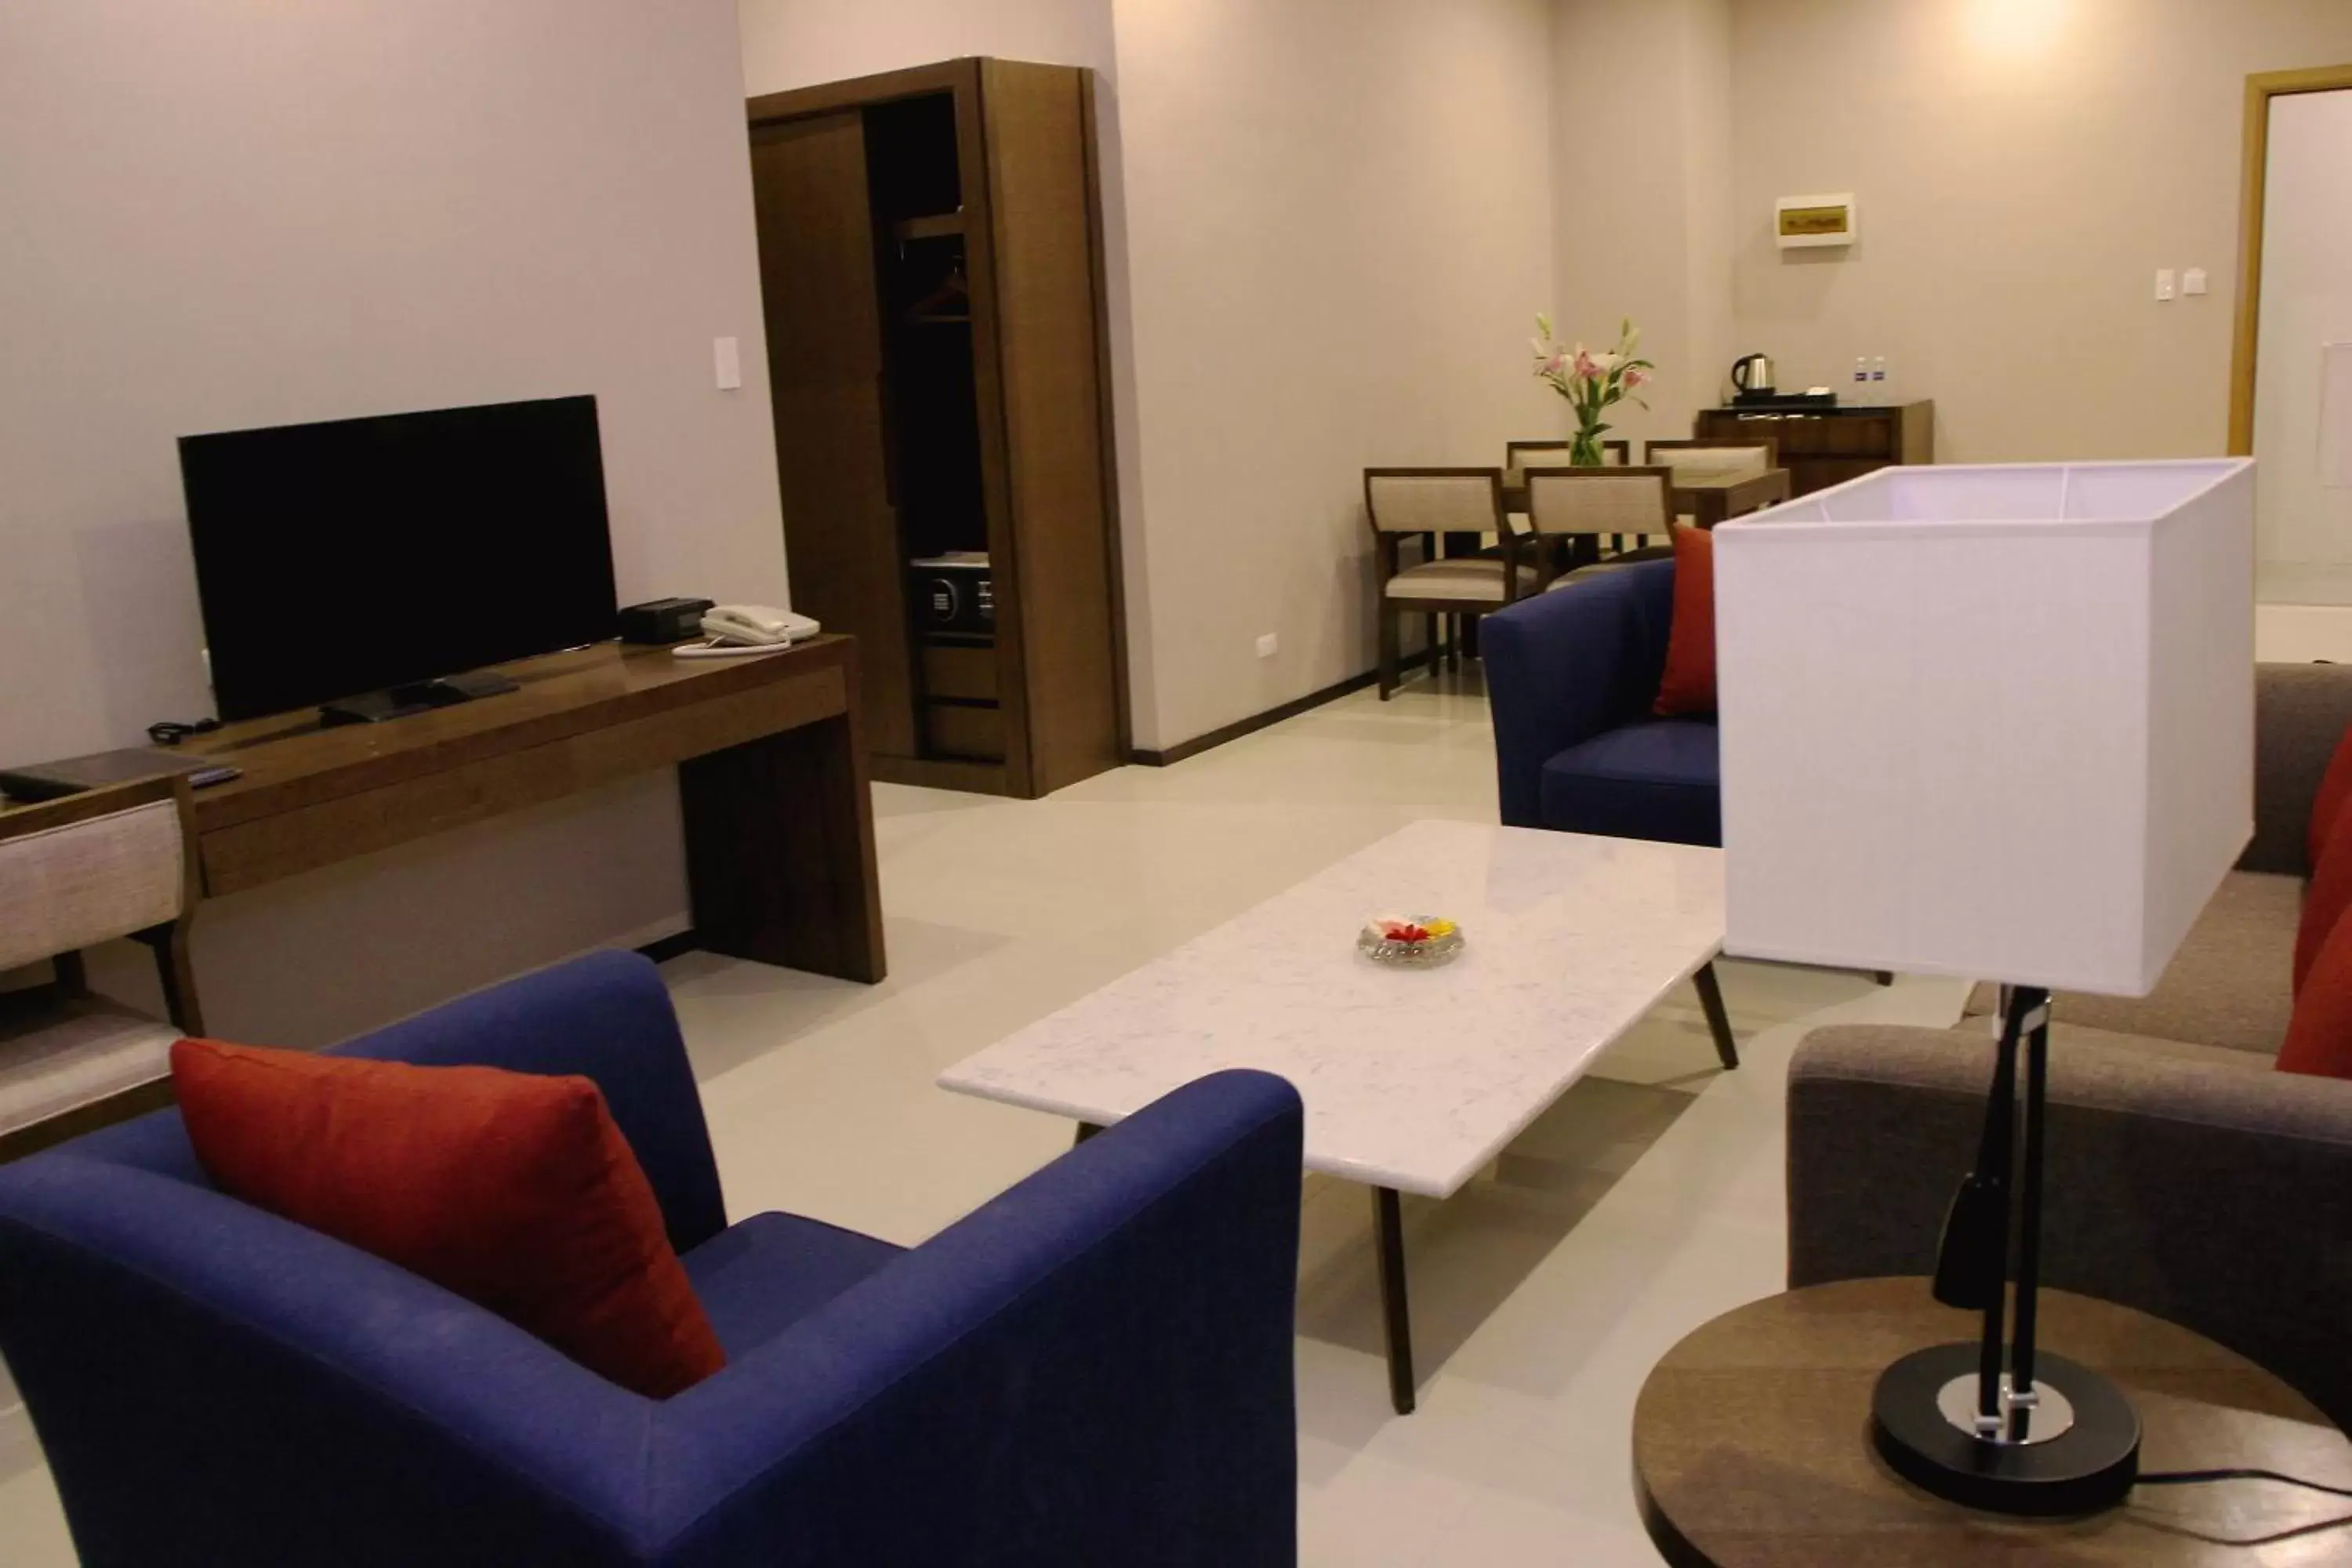 TV and multimedia, Seating Area in Golden Phoenix Hotel - Manila